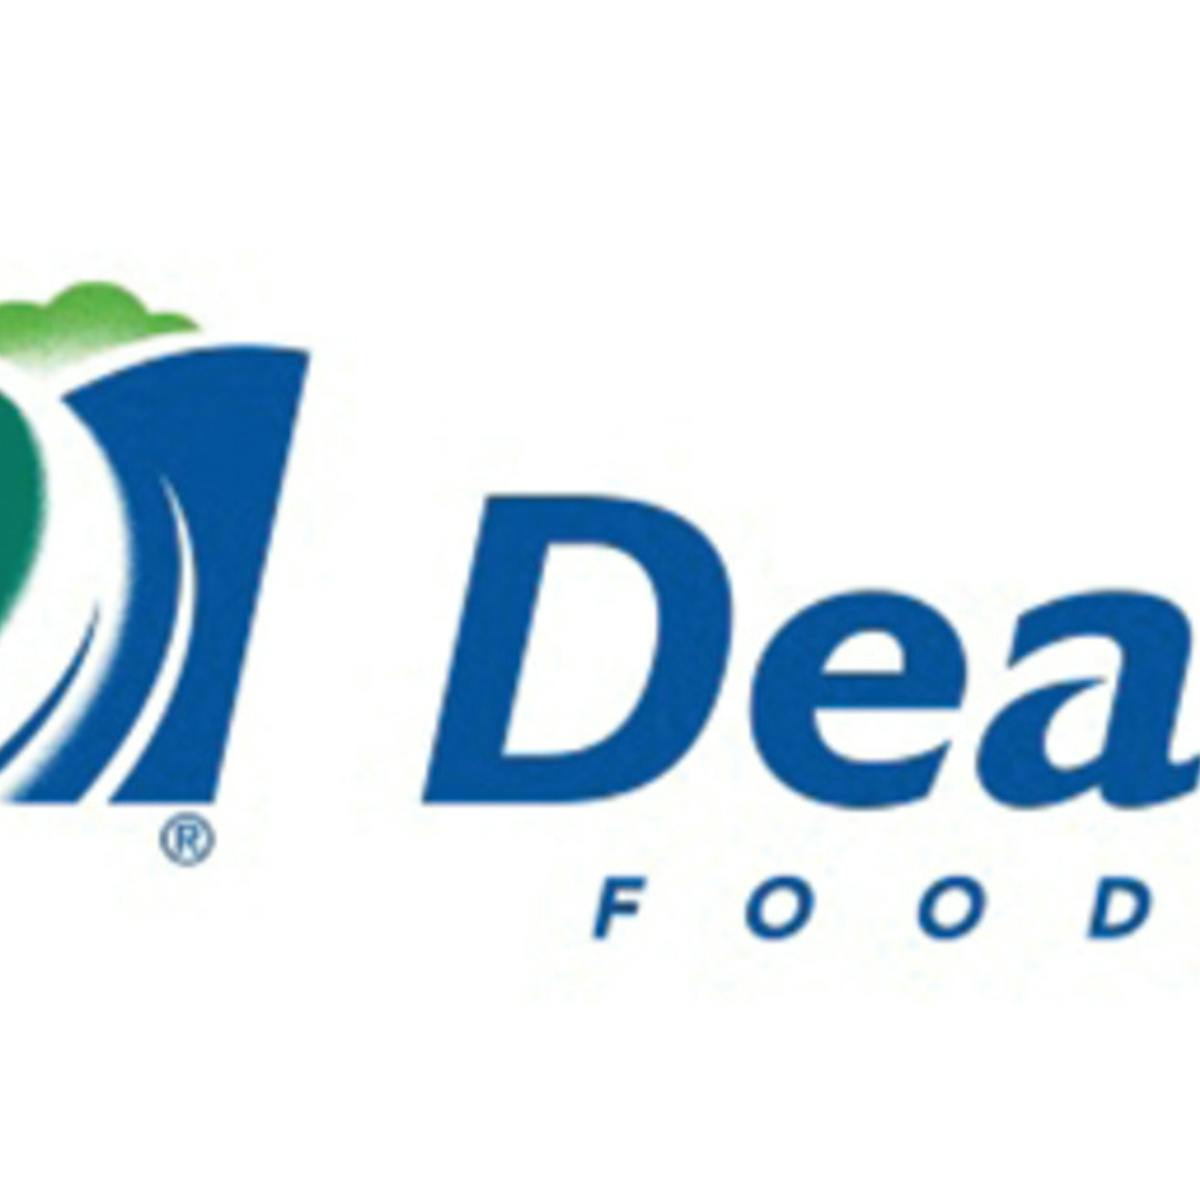 Dean Foods 11187654